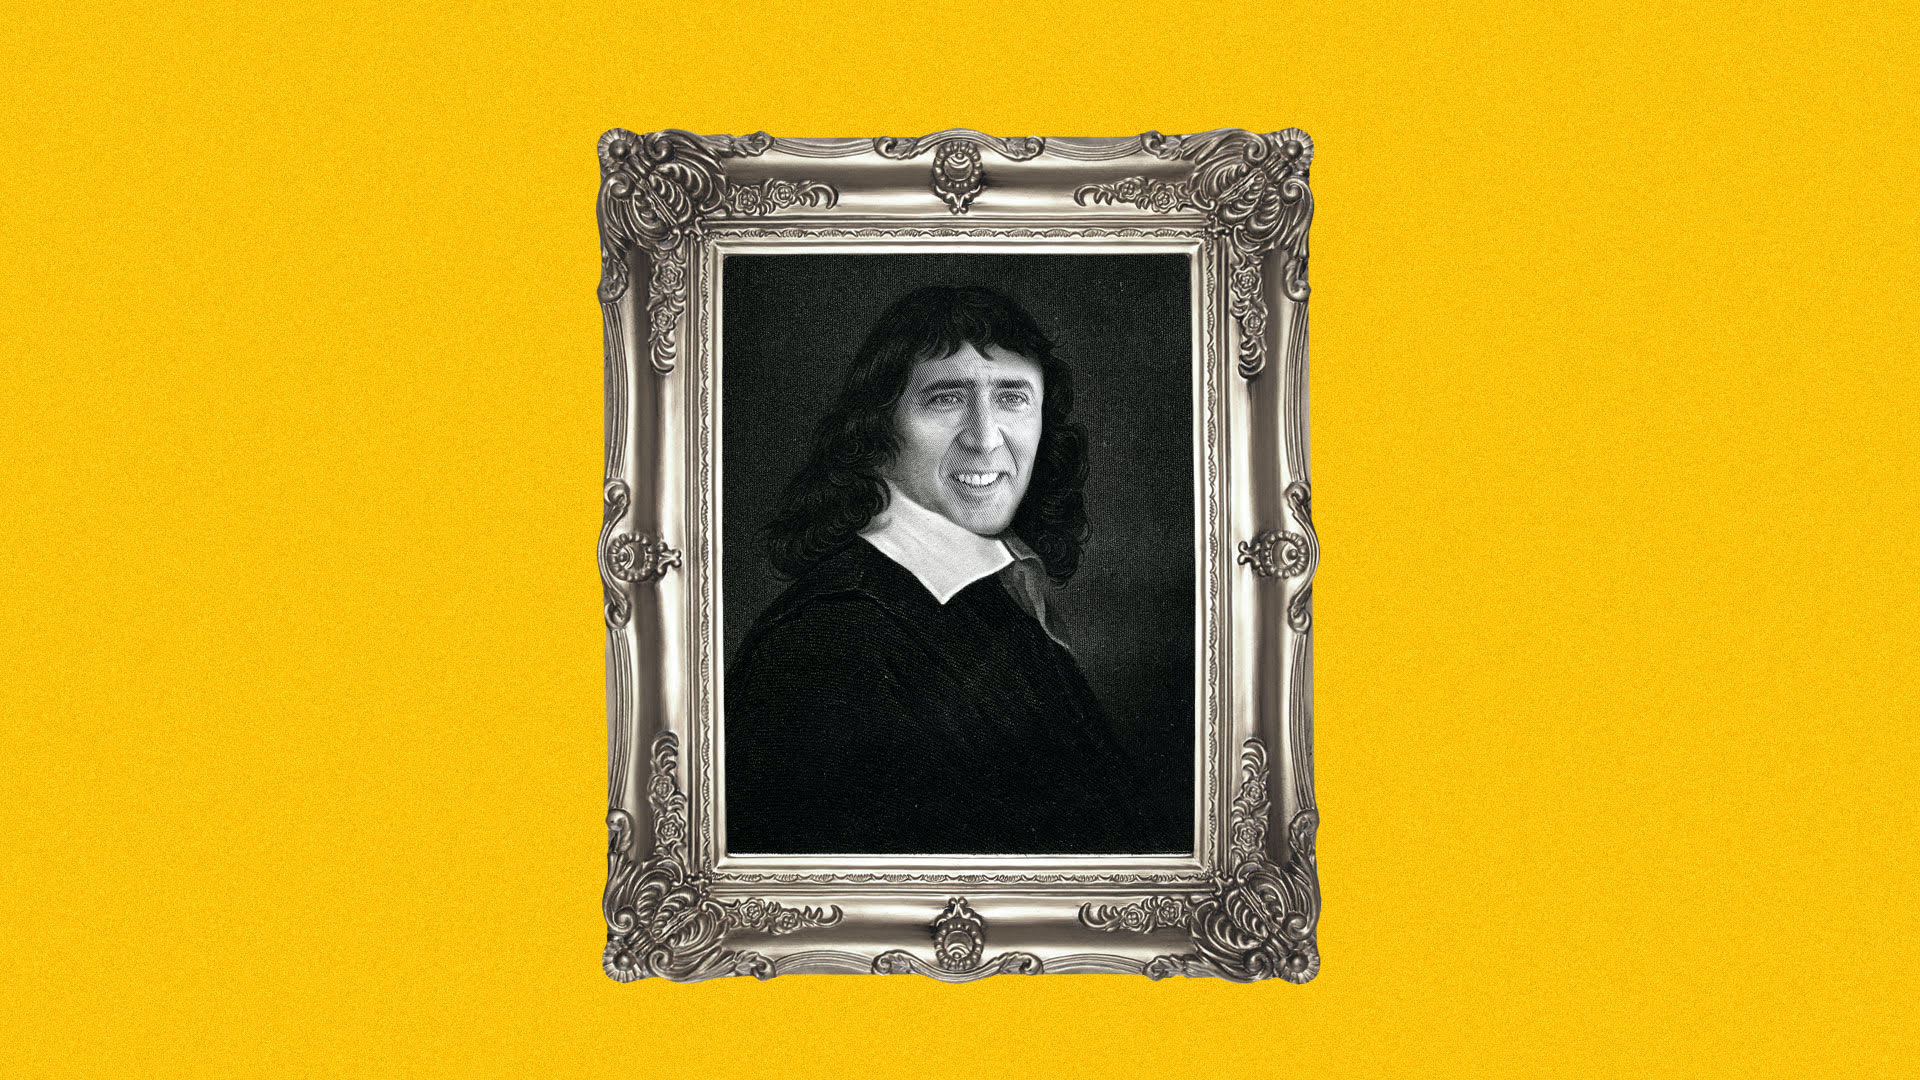 Illustration of a framed portrait of Renée Descartes with Nicholas Cage's face